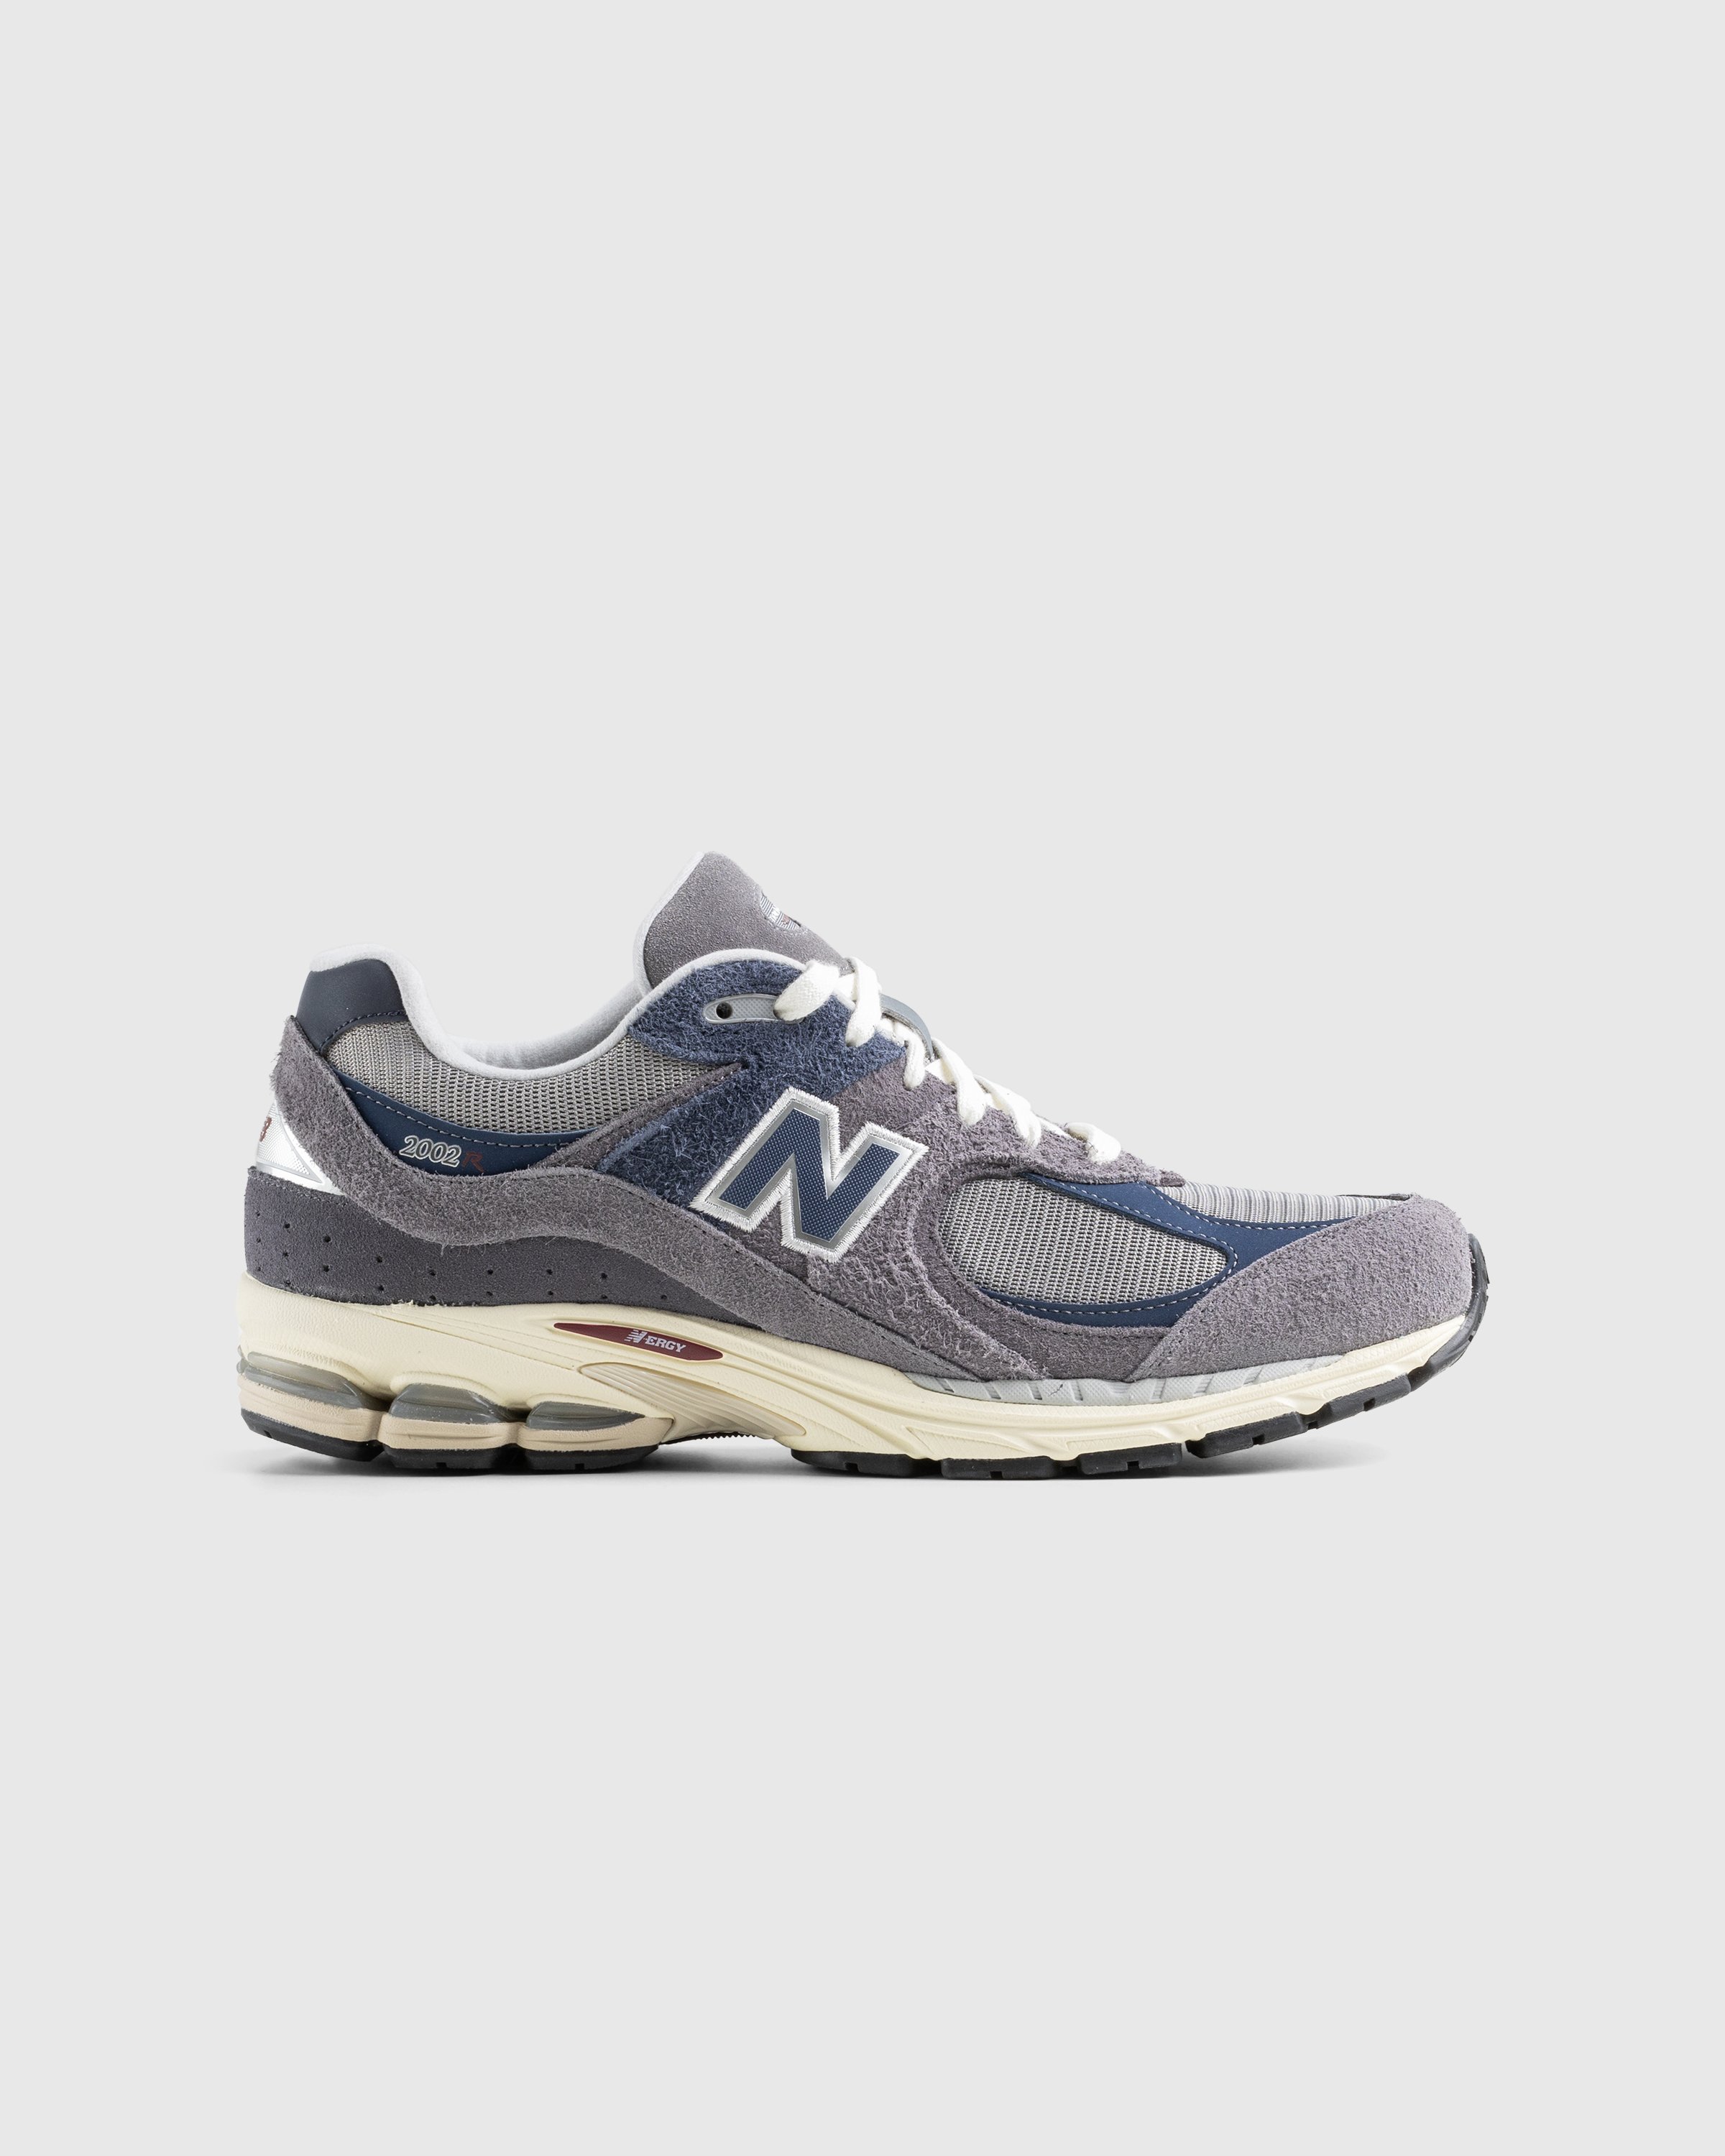 New Balance - M2002REL NB NAVY - Footwear - Blue - Image 1